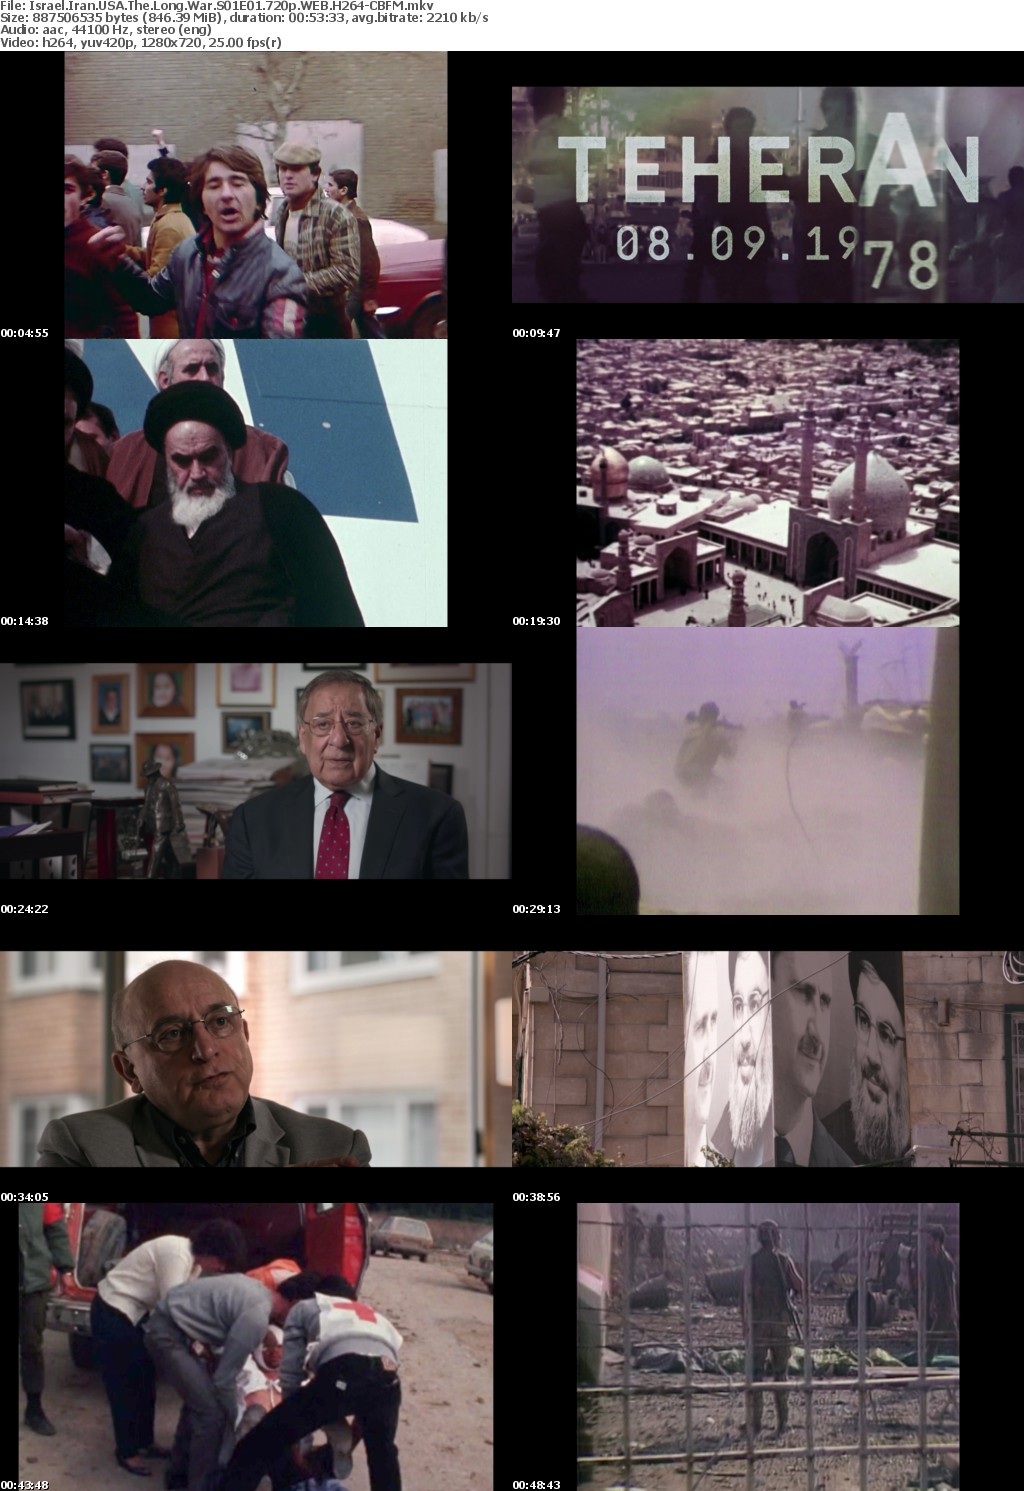 Israel Iran USA The Long War S01E01 720p WEB H264-CBFM